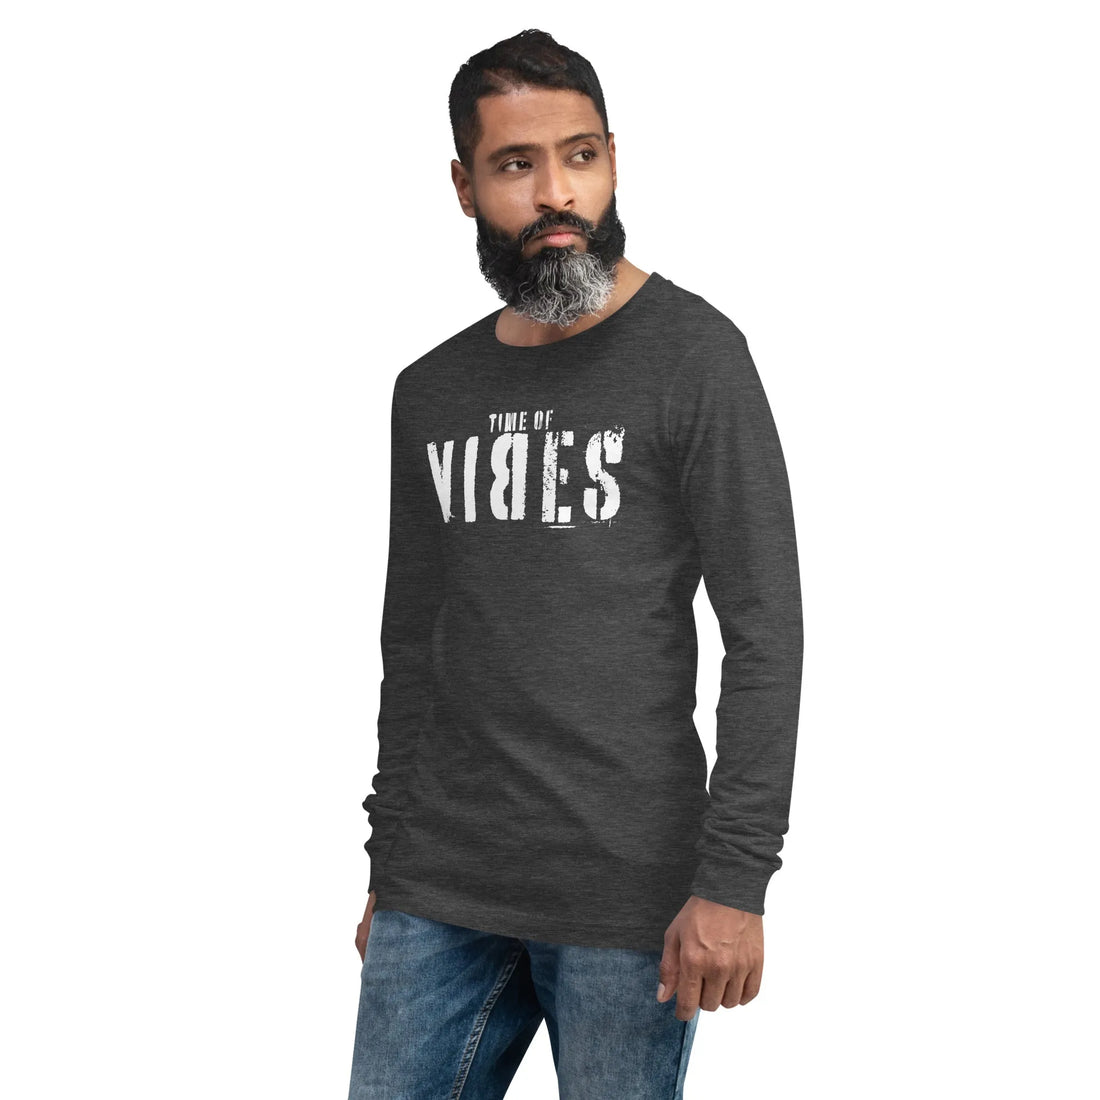 Langarm Baumwoll T-Shirt VIBES (Dunkelgrau/Weiß), Langarm T-Shirts, Time Of Vibes